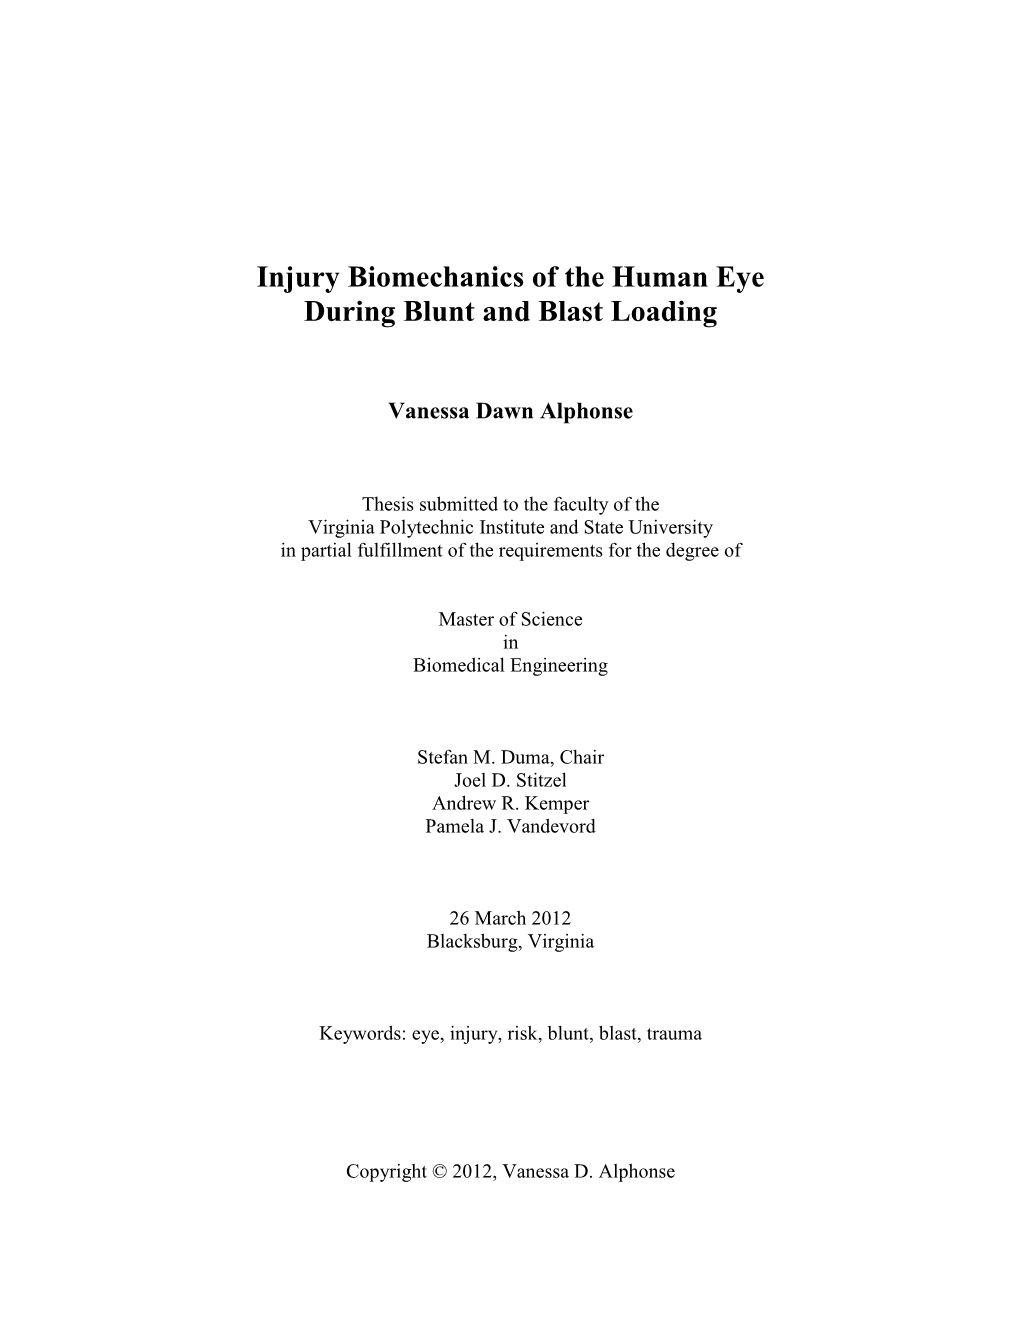 Injury Biomechanics of the Human Eye During Blunt and Blast Loading